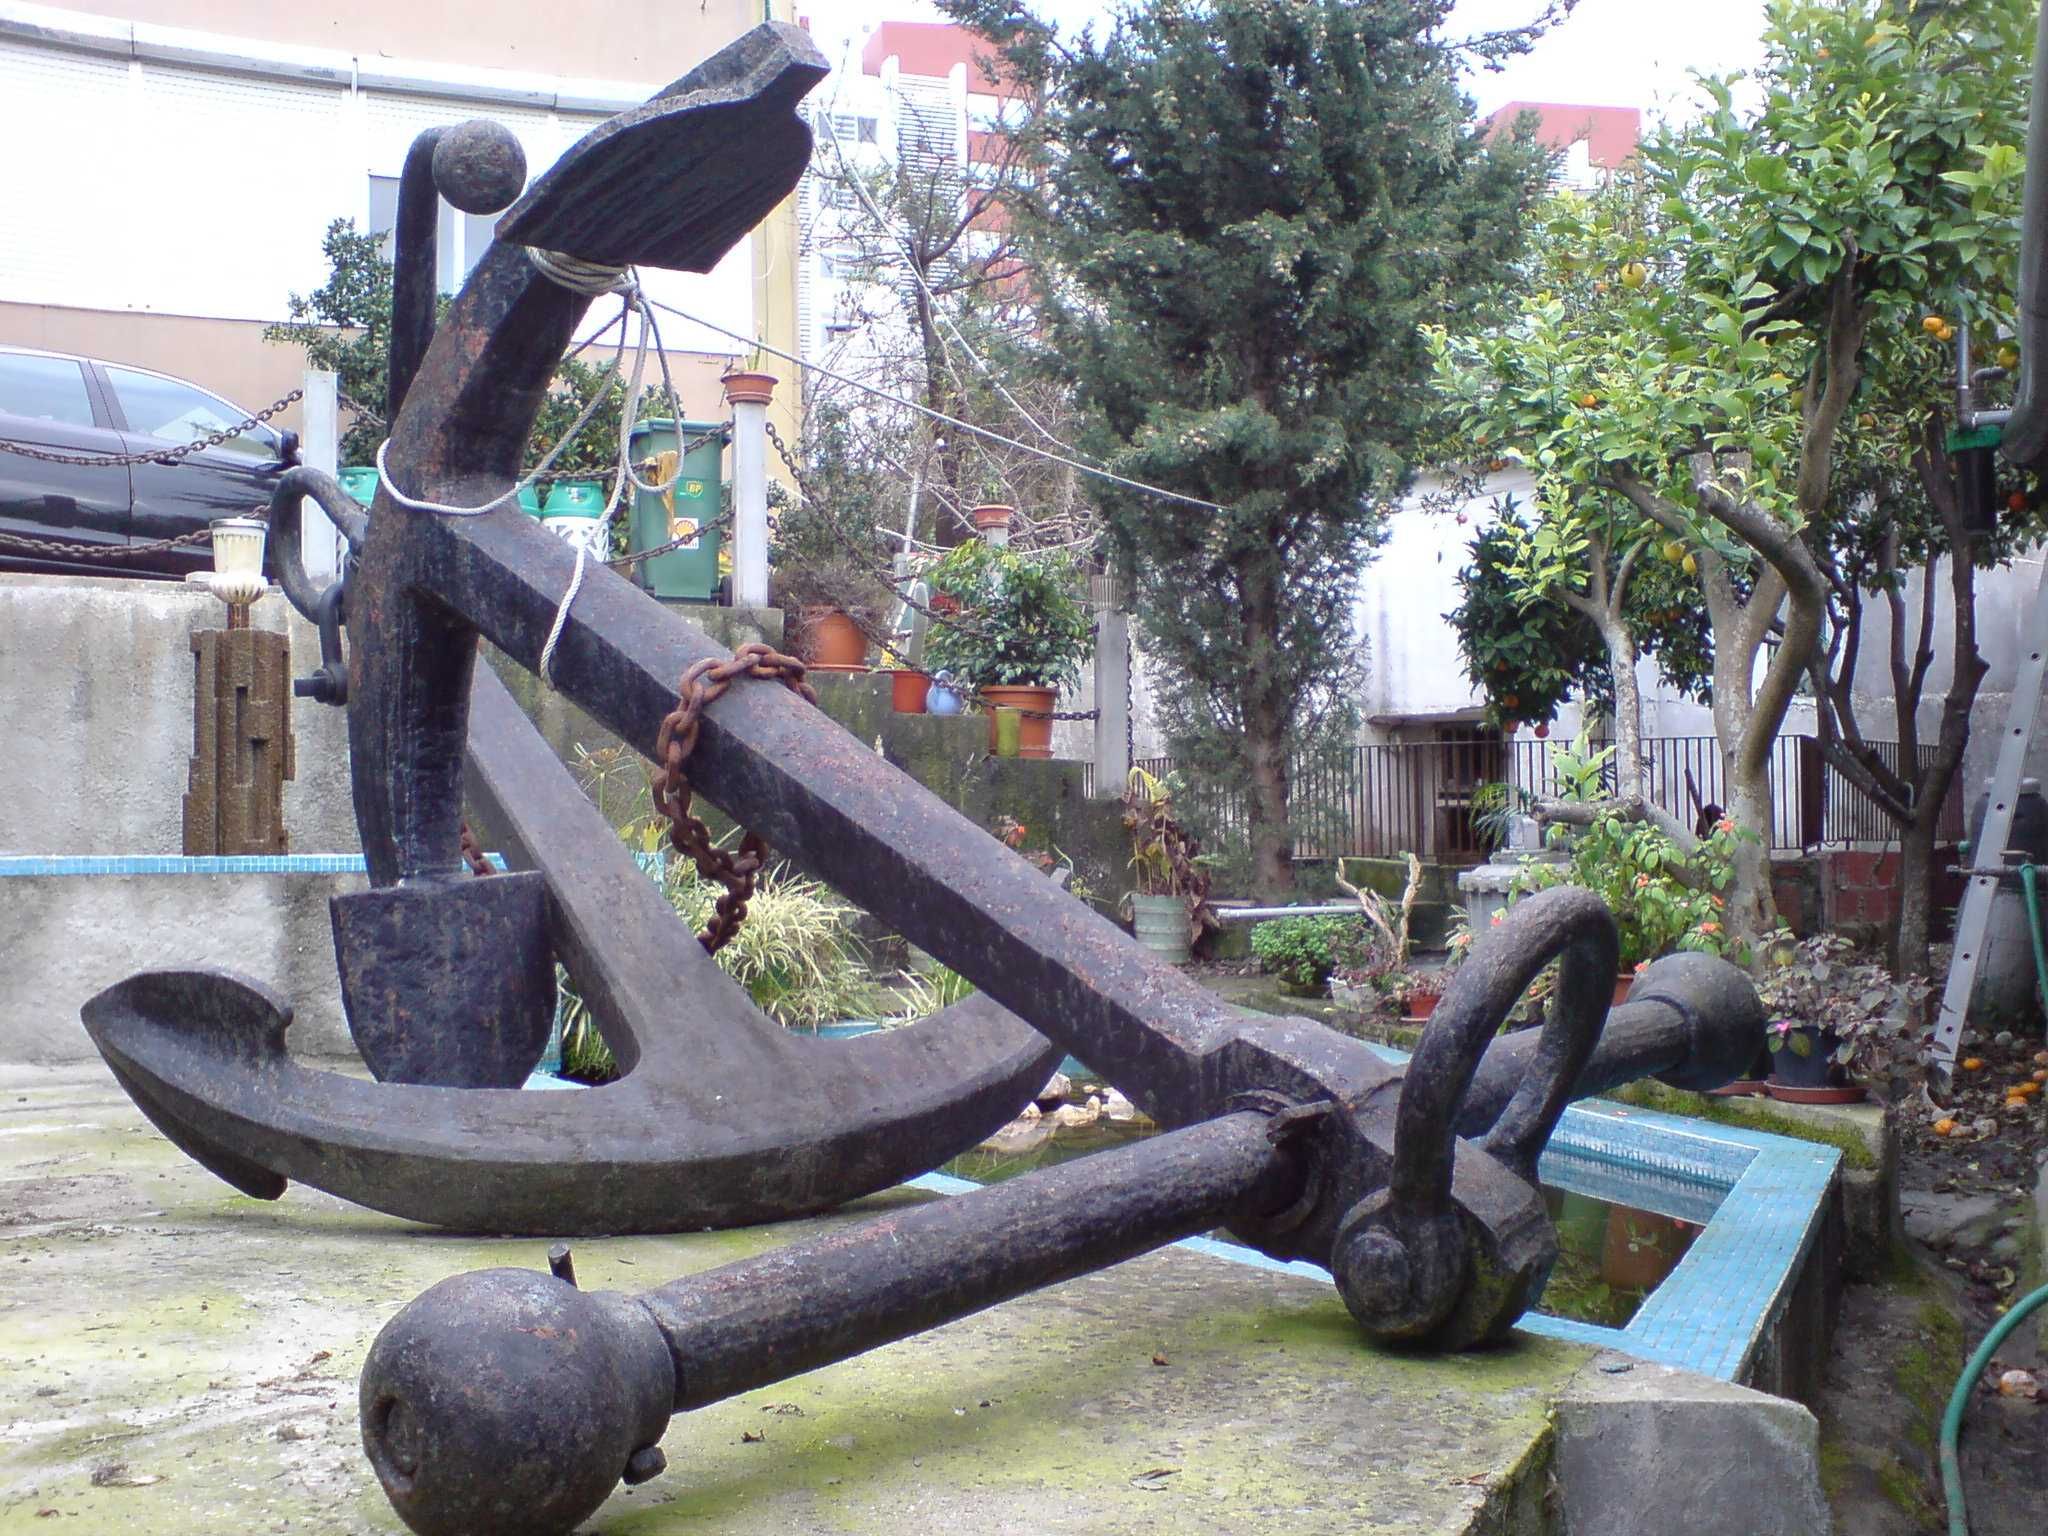 Conjunto duas ancoras (ferro almirantado) antigas navio ferro fundido